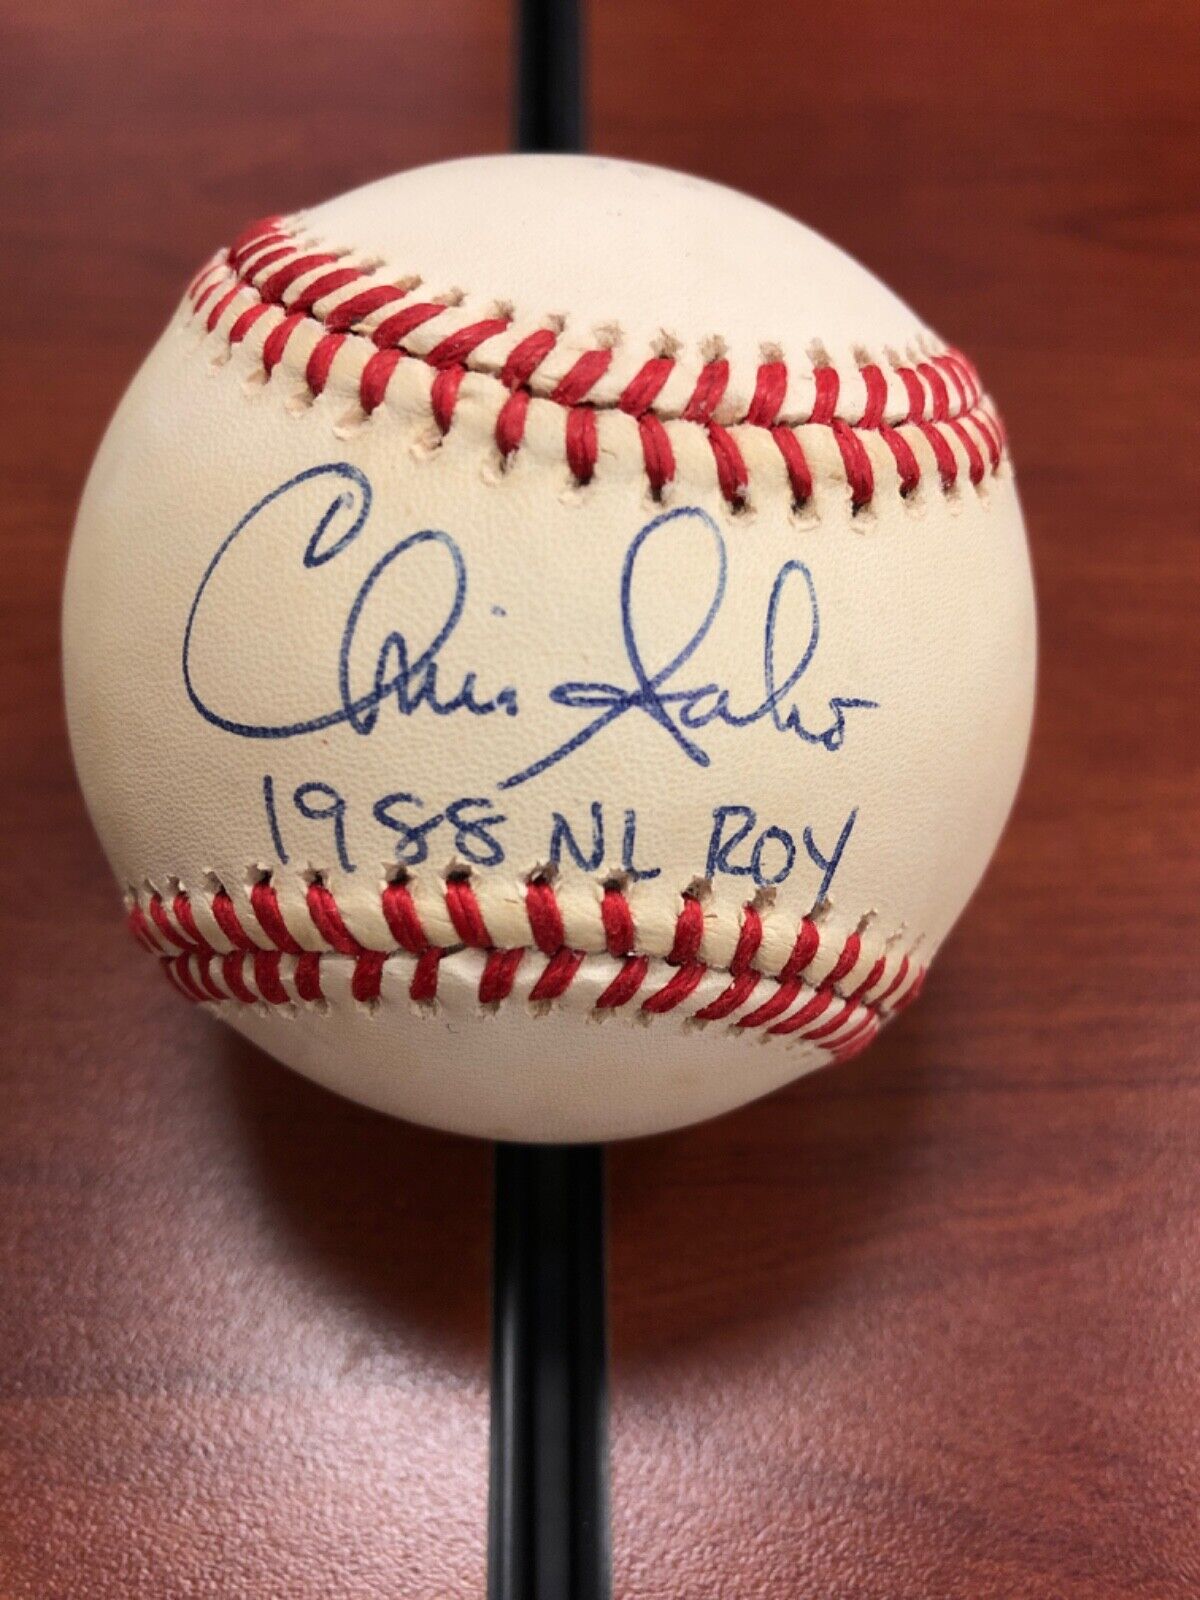 Chris Sabo Autographed Baseball w/1988 NL Roy Inscription & JSA Authenticated